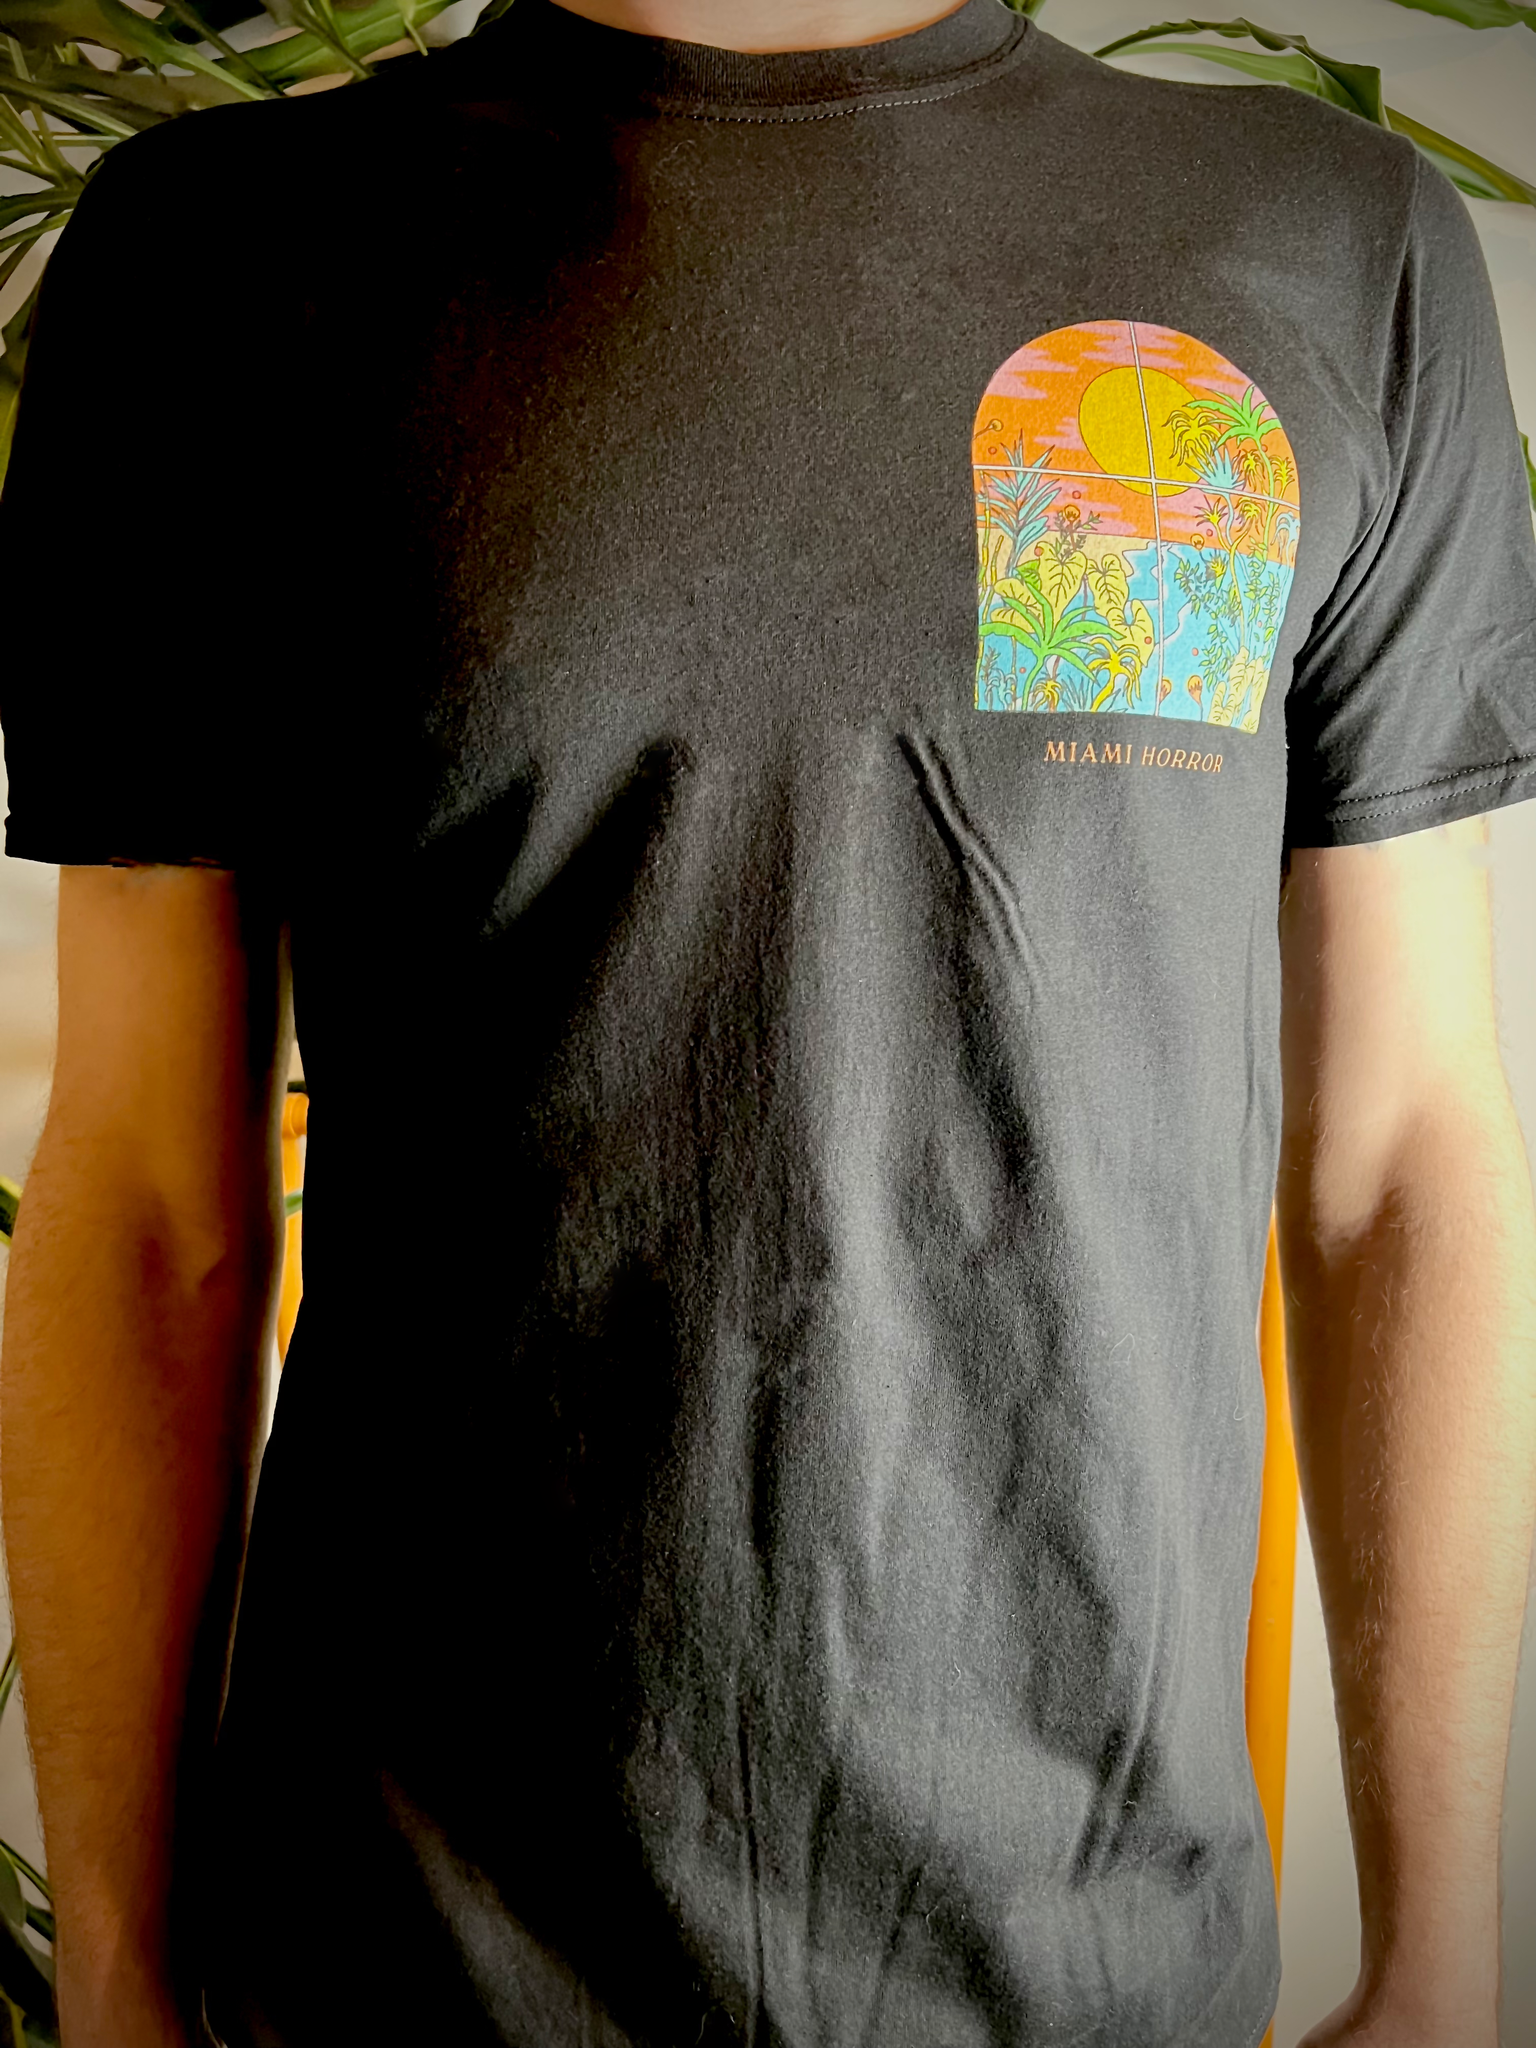 Miami Horror's Island T-Shirt